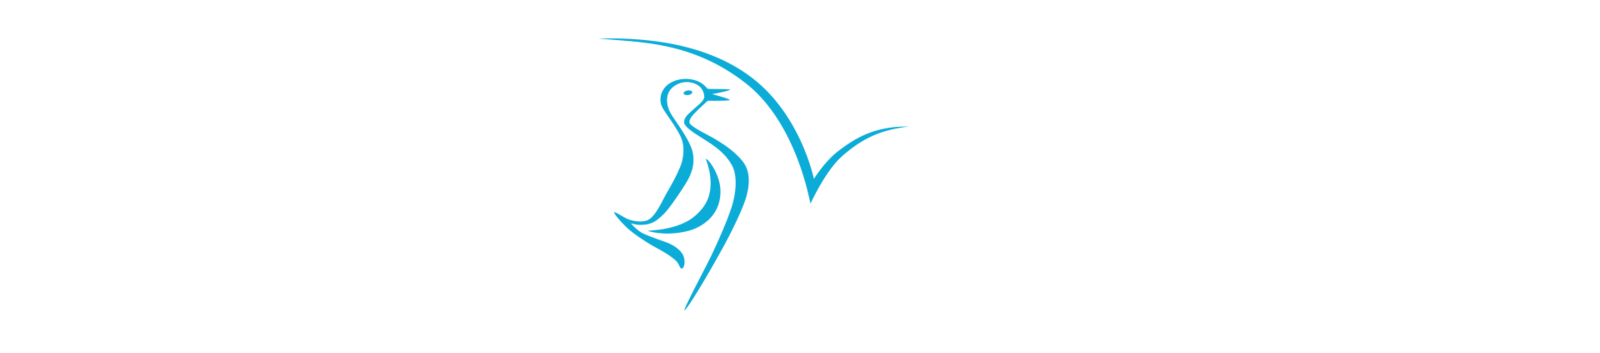 logo vbc epalinges | BUREAU